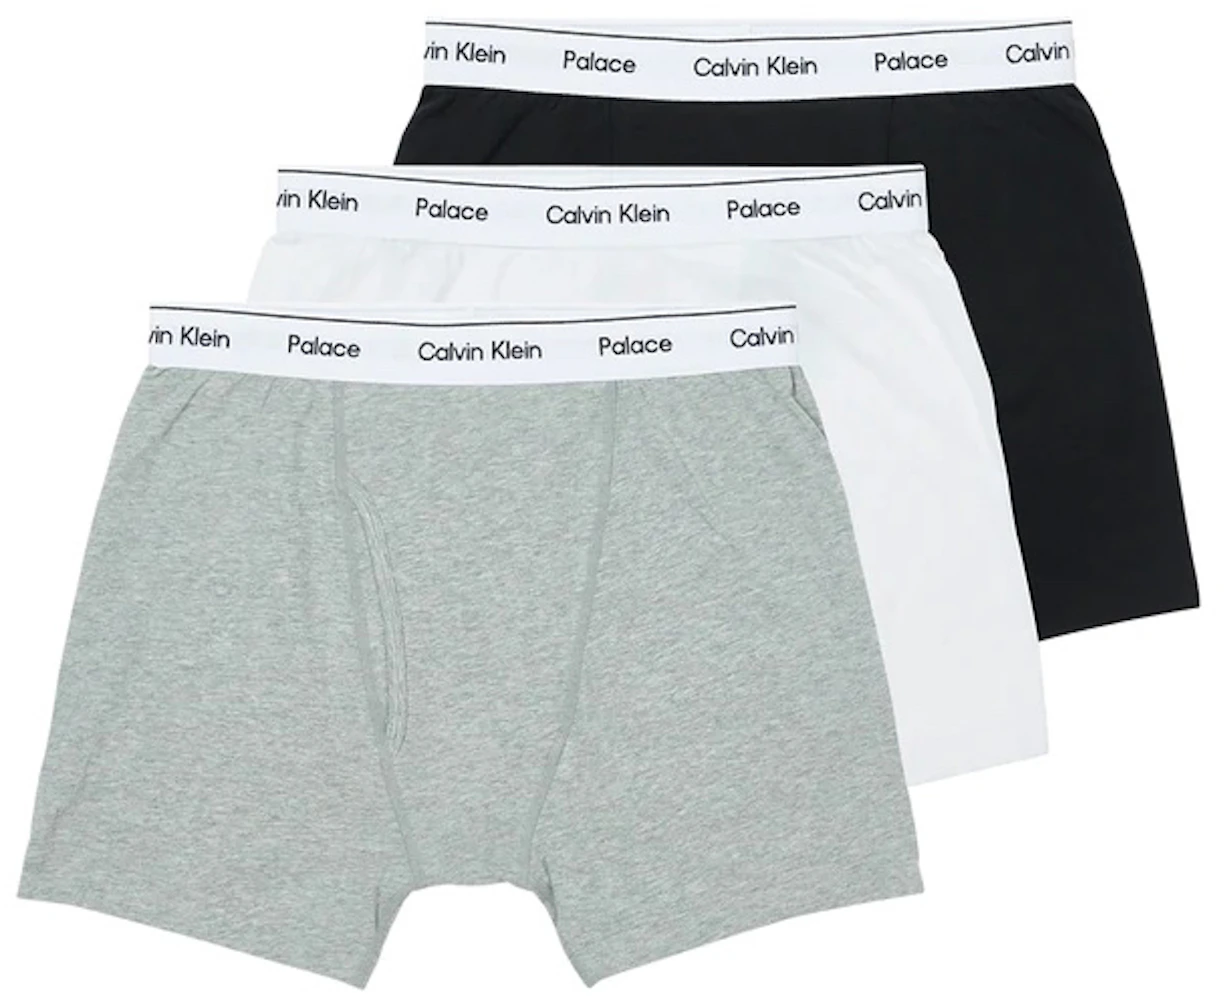 Palace CK1 Boxer Briefs (3 Pack) White/Light Grey Heather Men's